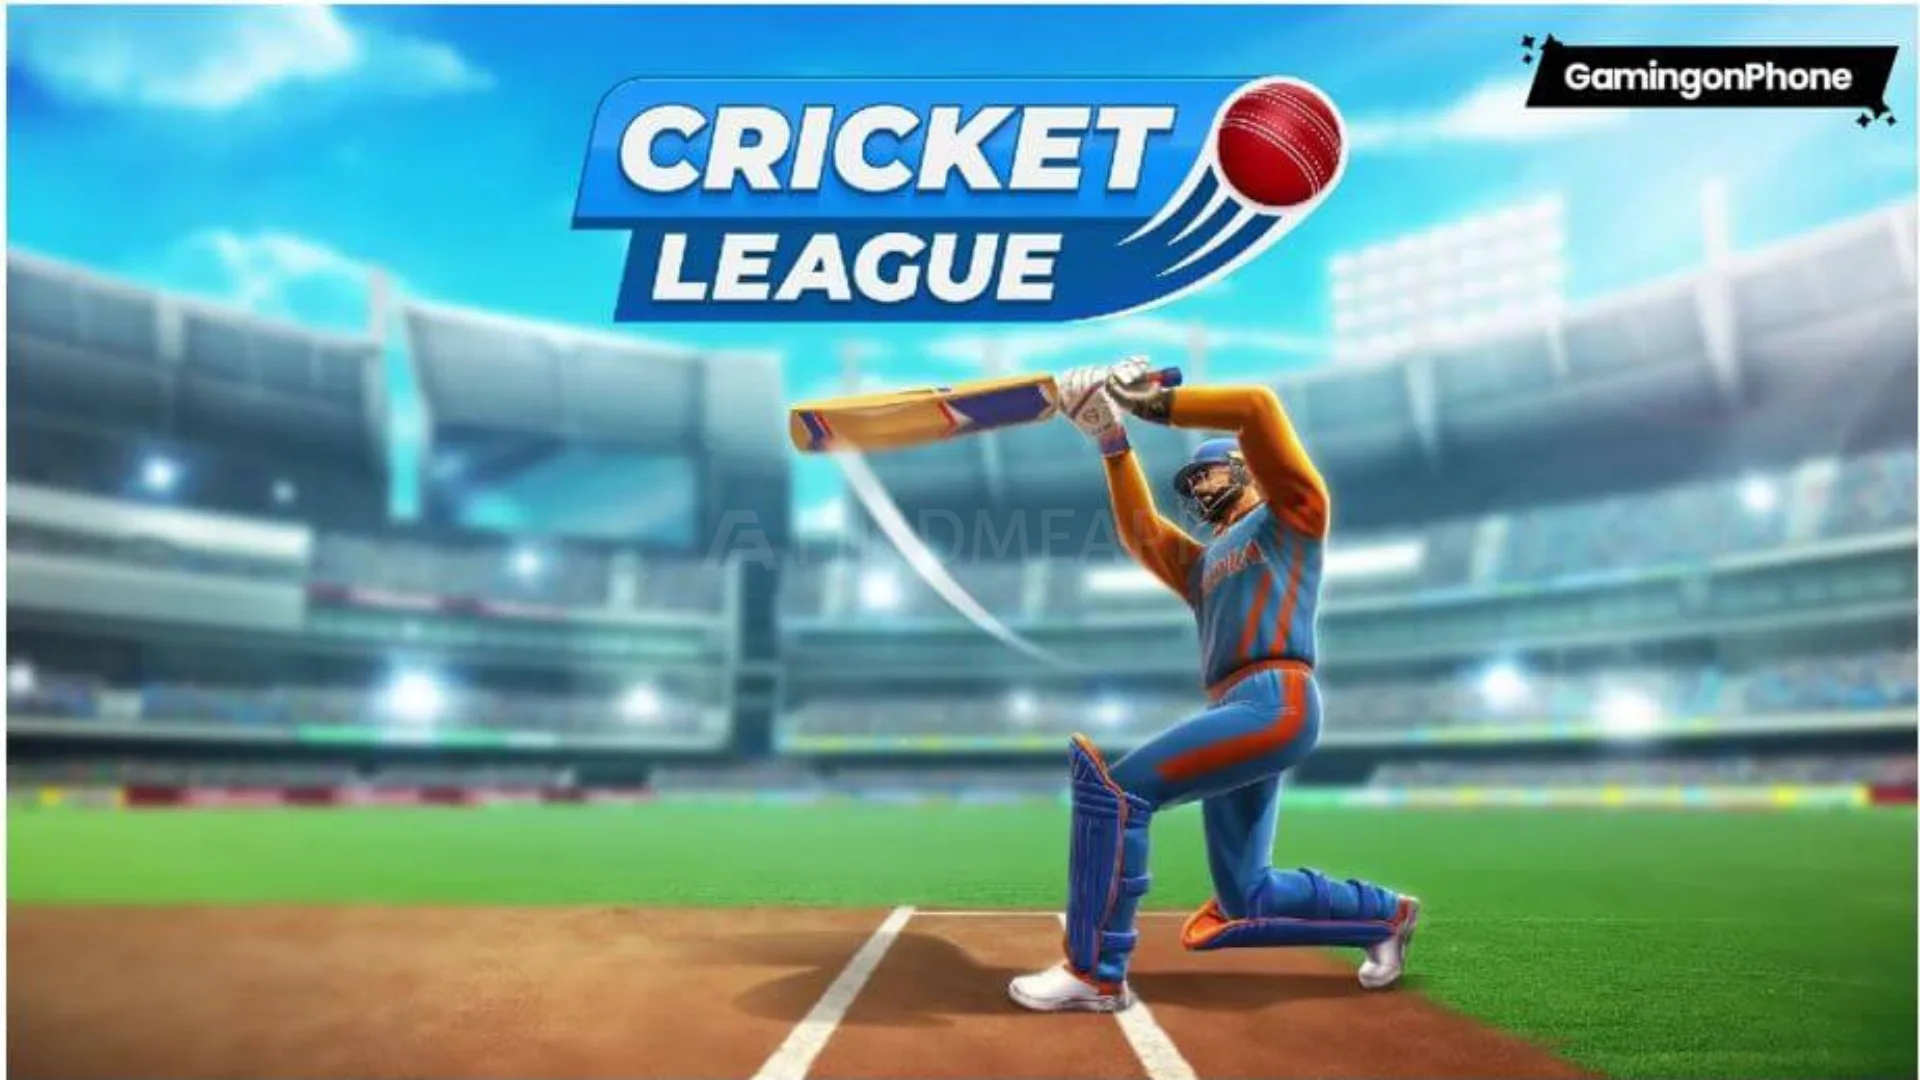 Cricket League Feature image